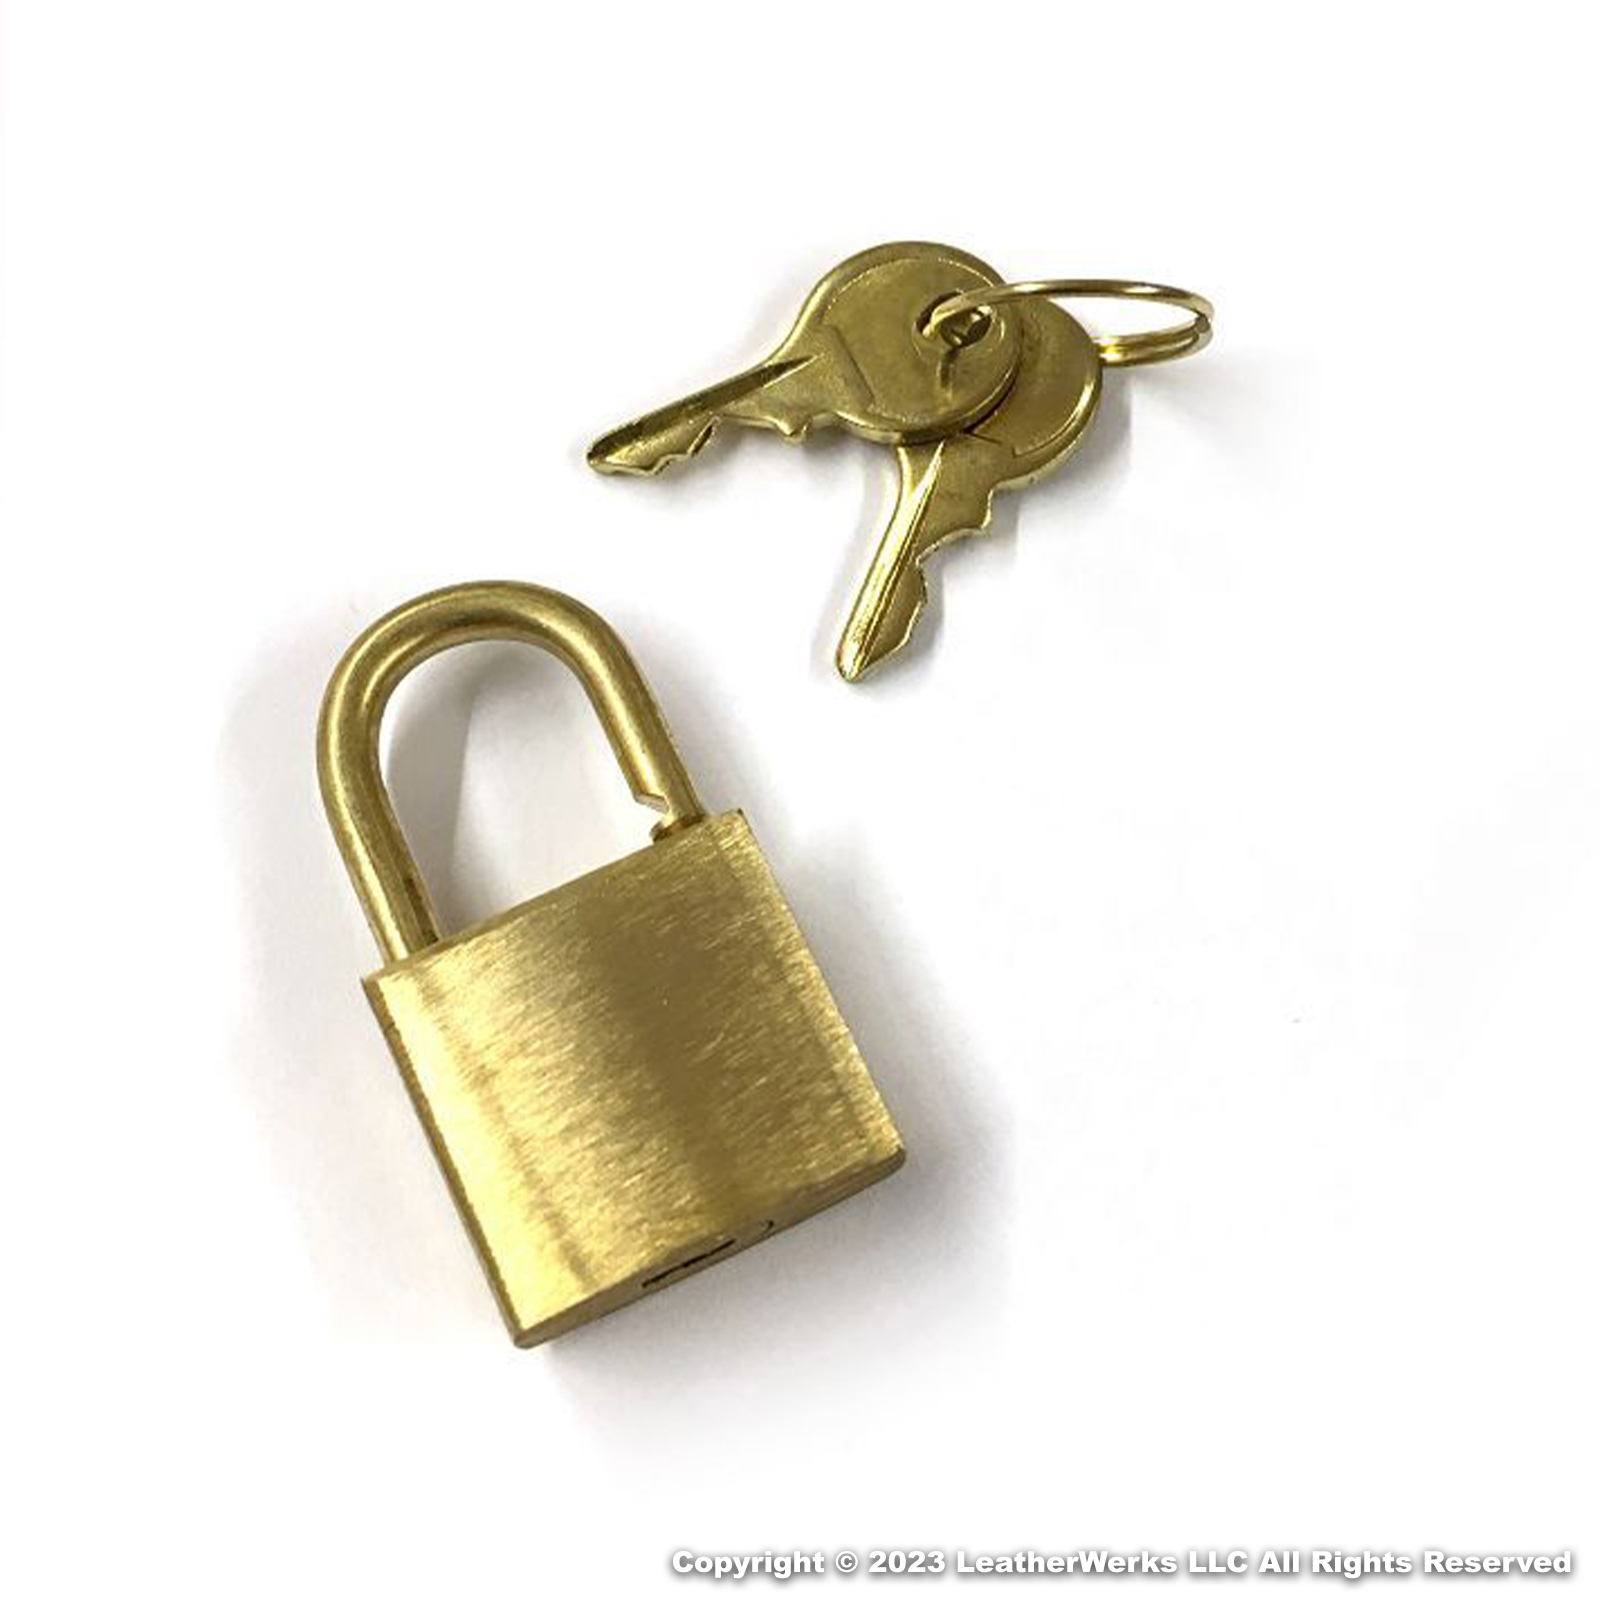 891009 Small Lock Keyed Alike Brass